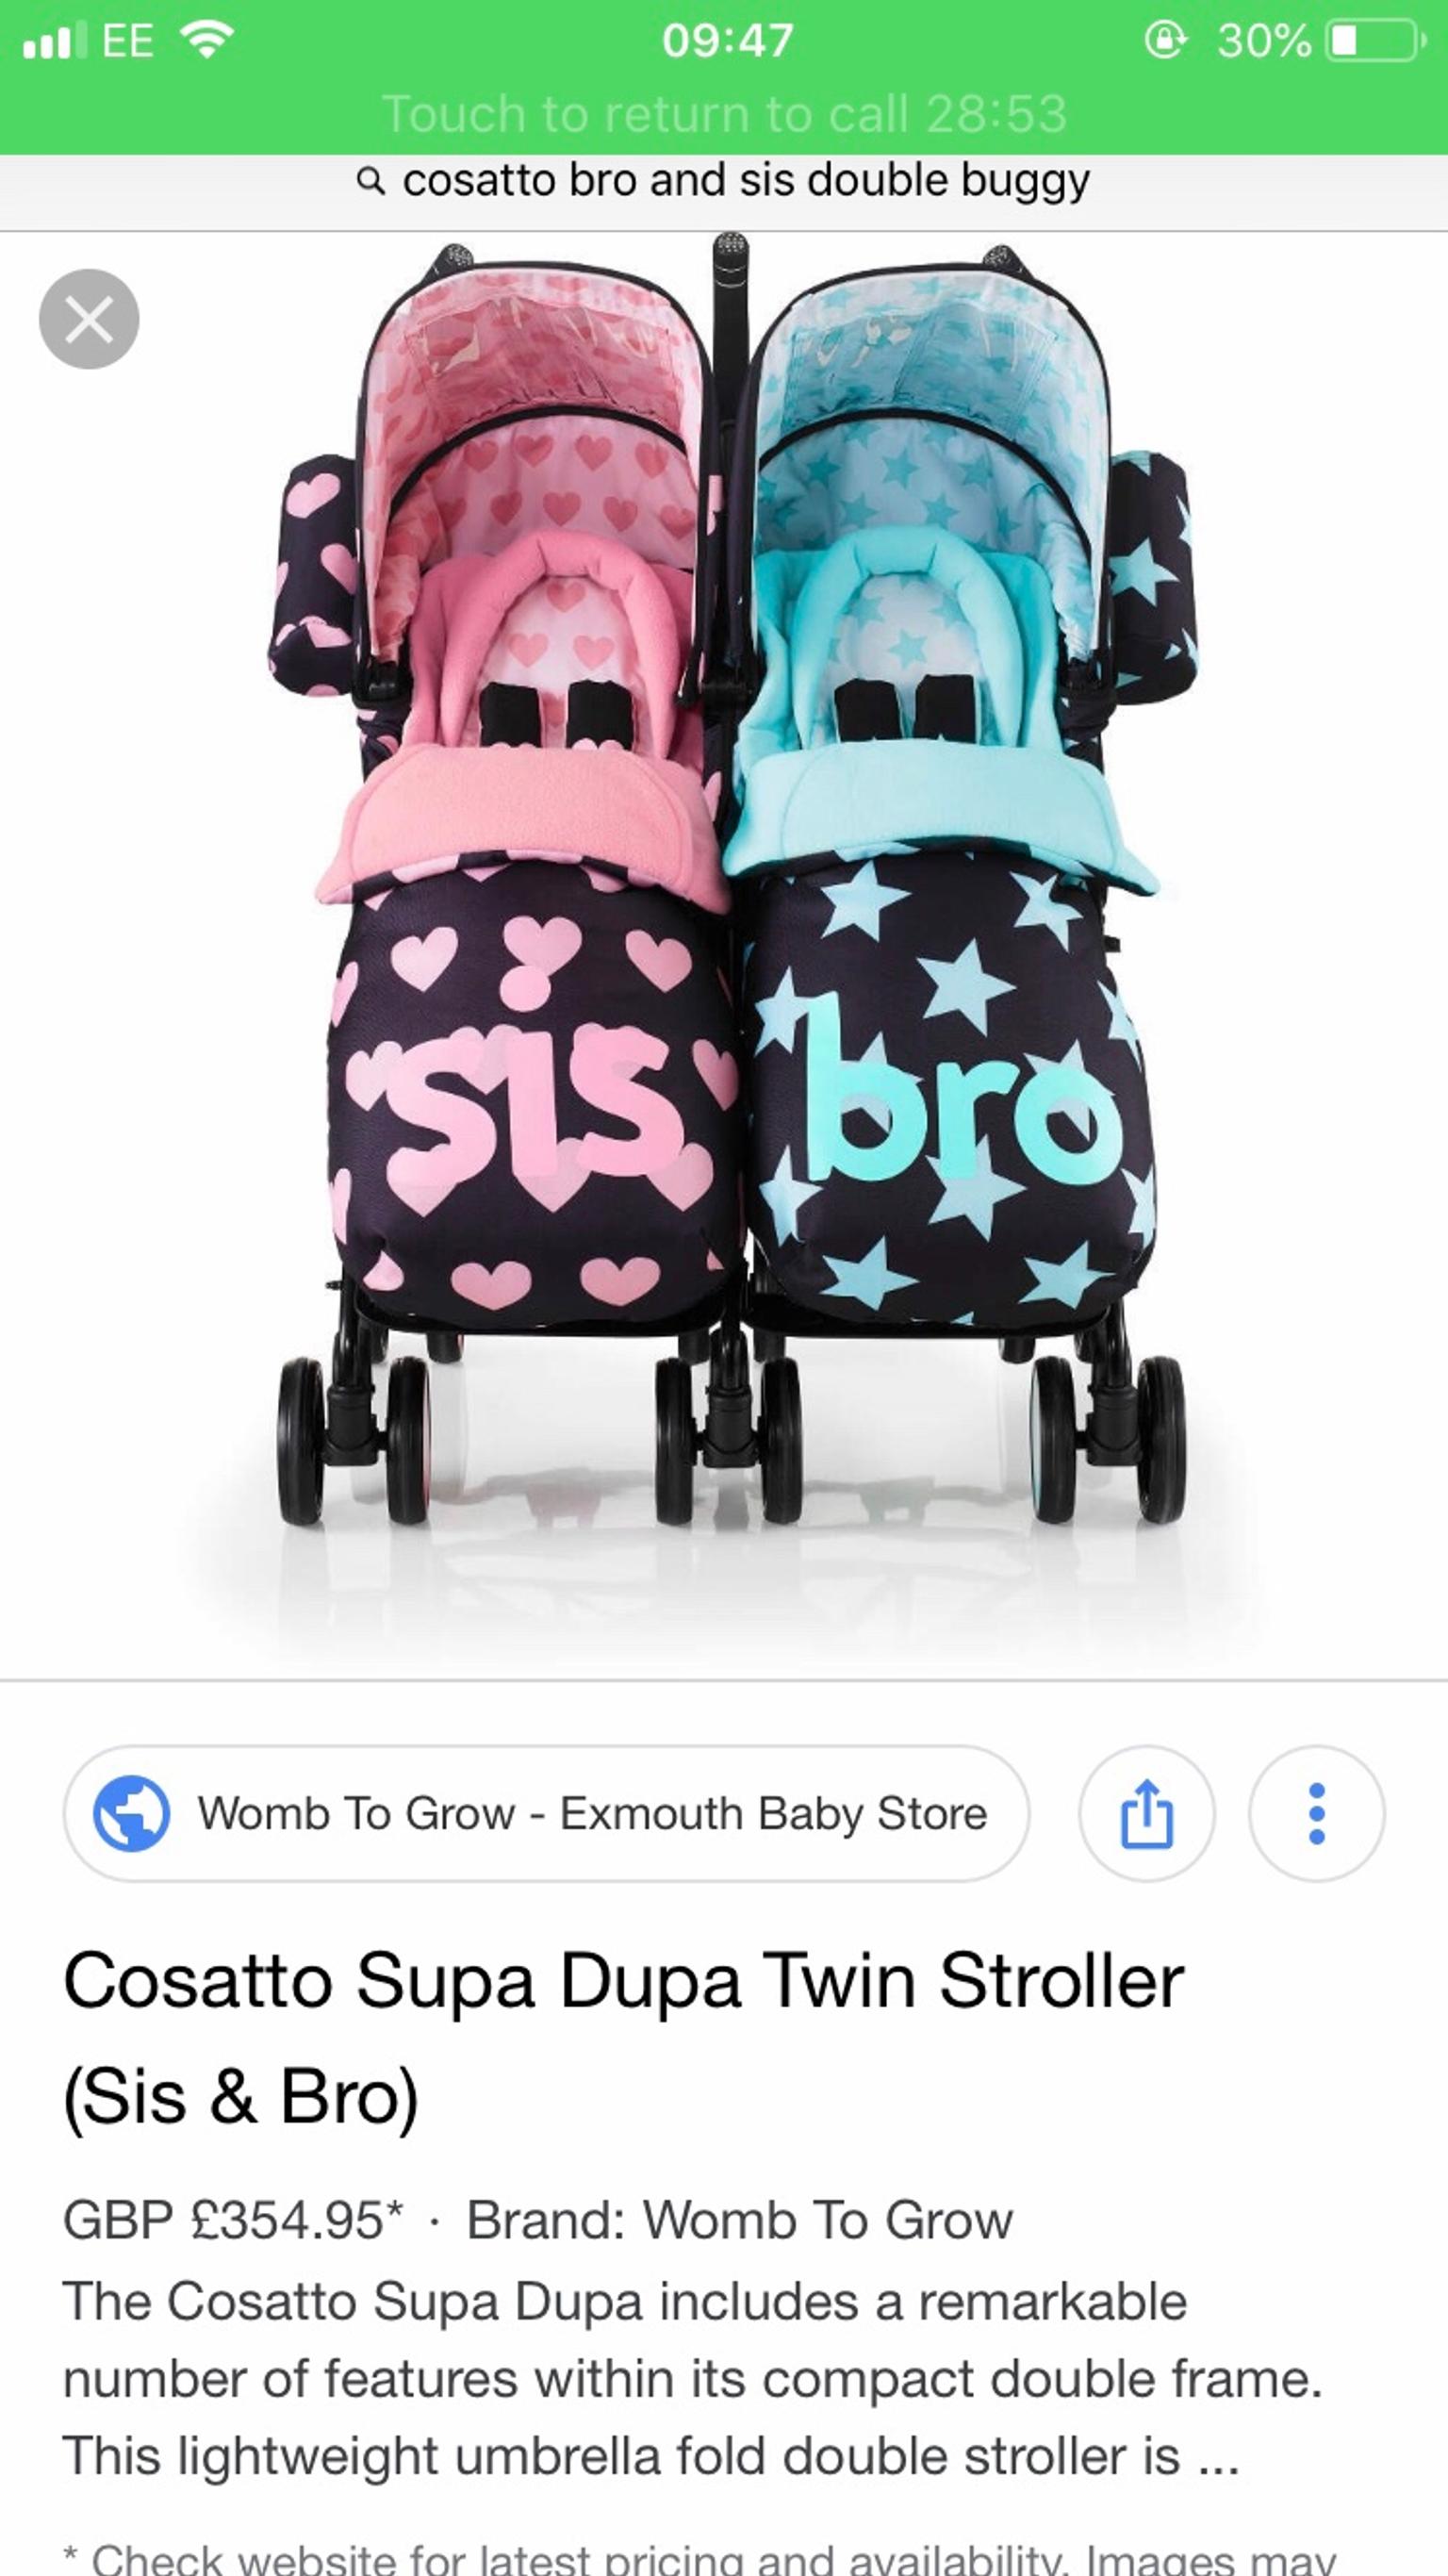 bro and sis stroller